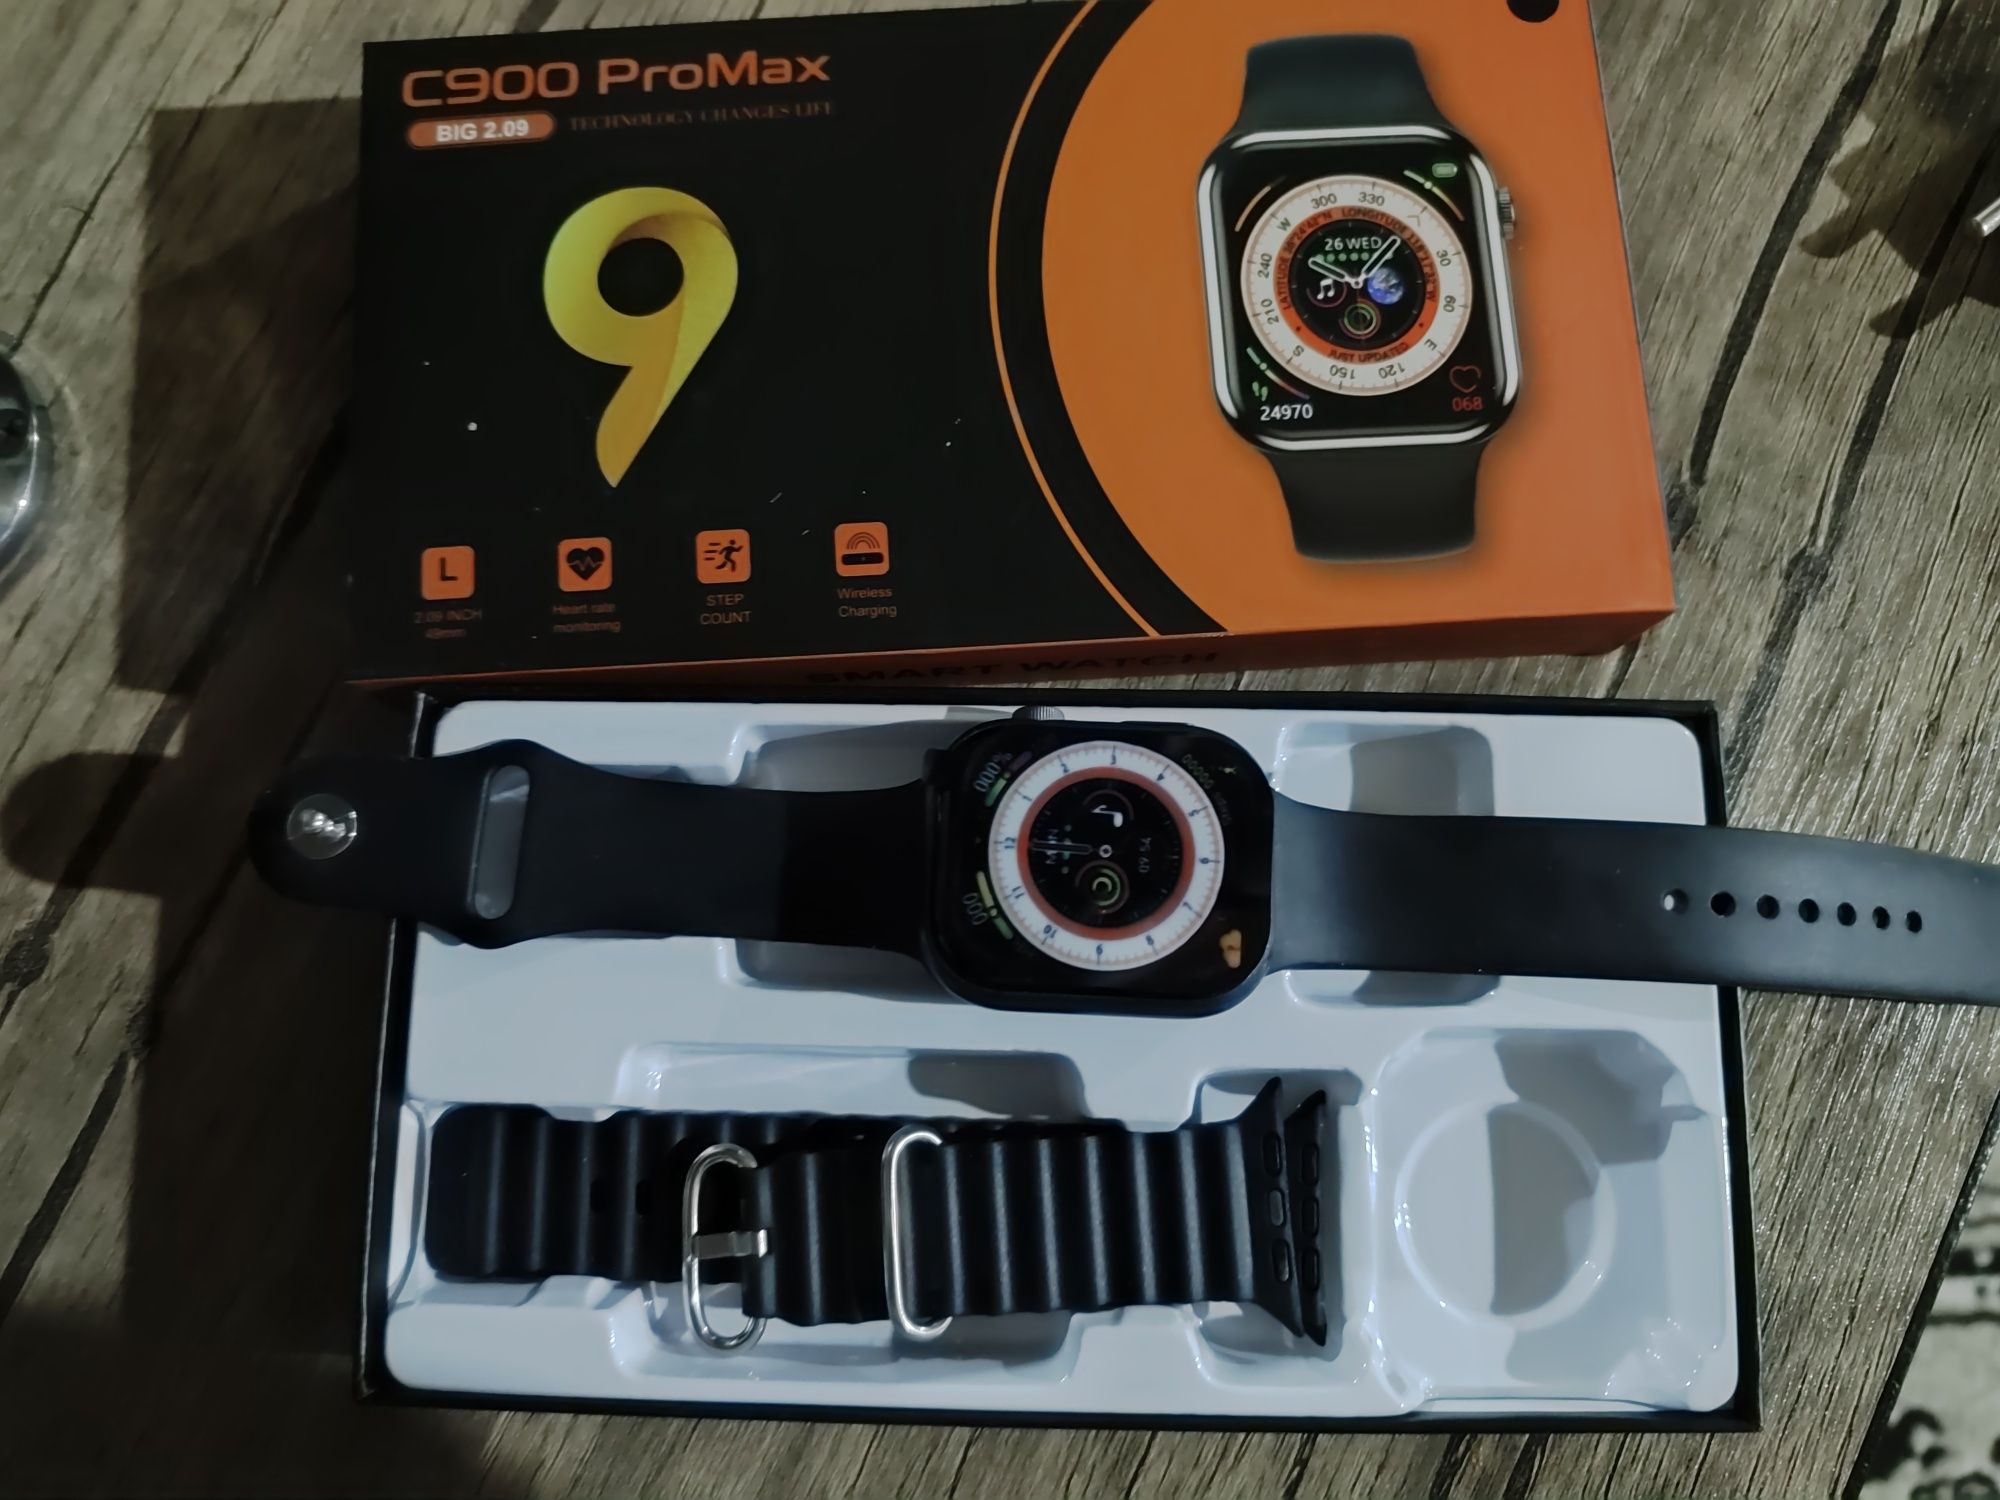 Smart watch 9 pro max